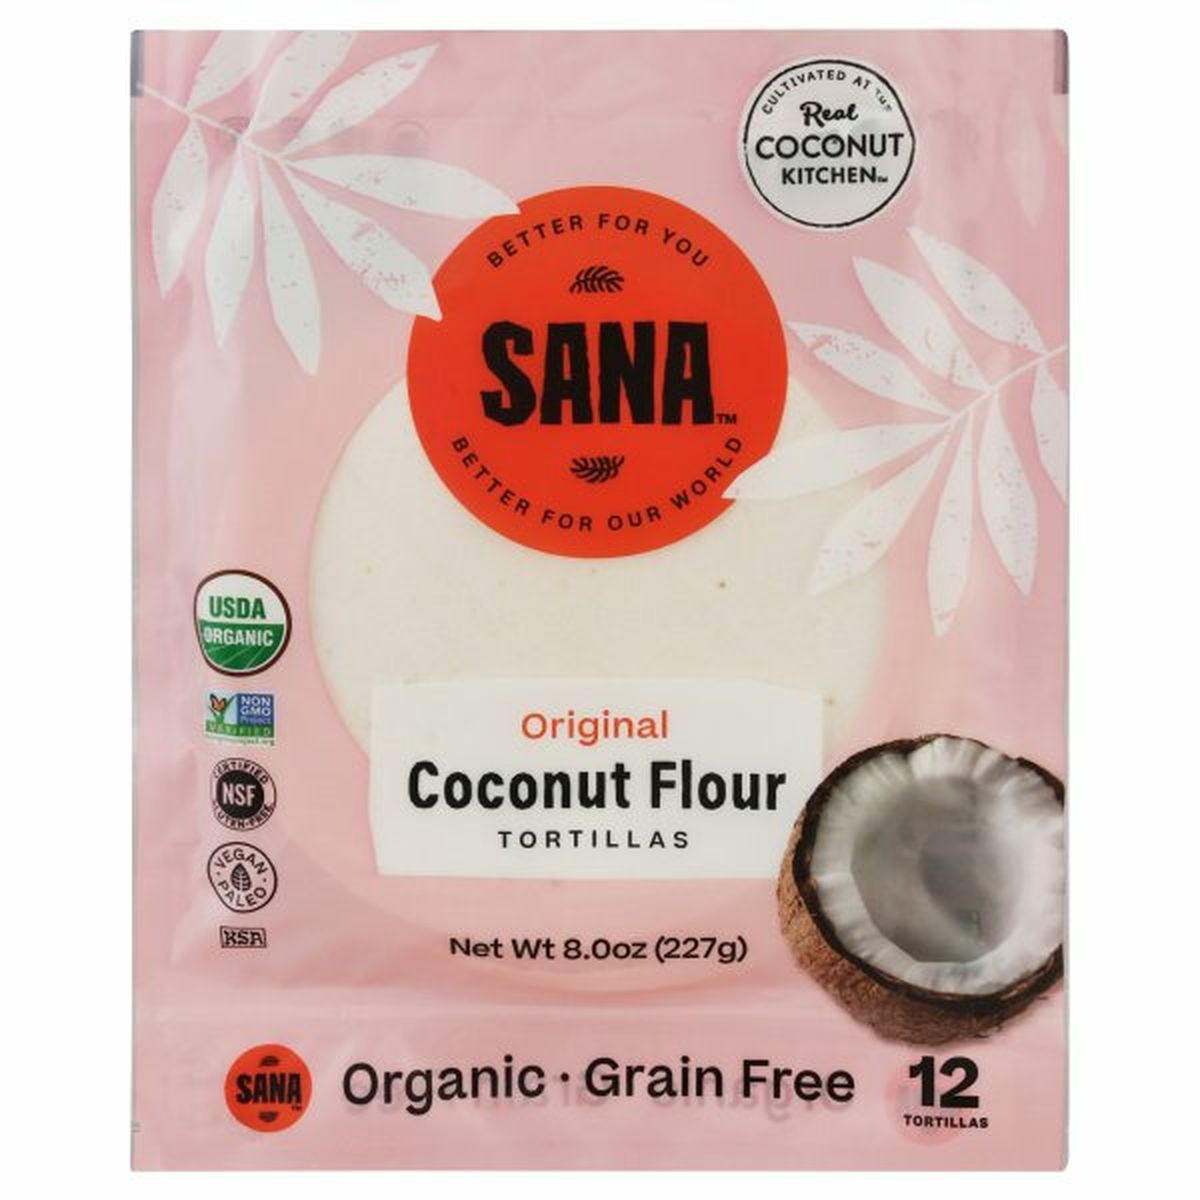 Calories in Sana Tortillas, Organic, Coconut Flour, Original